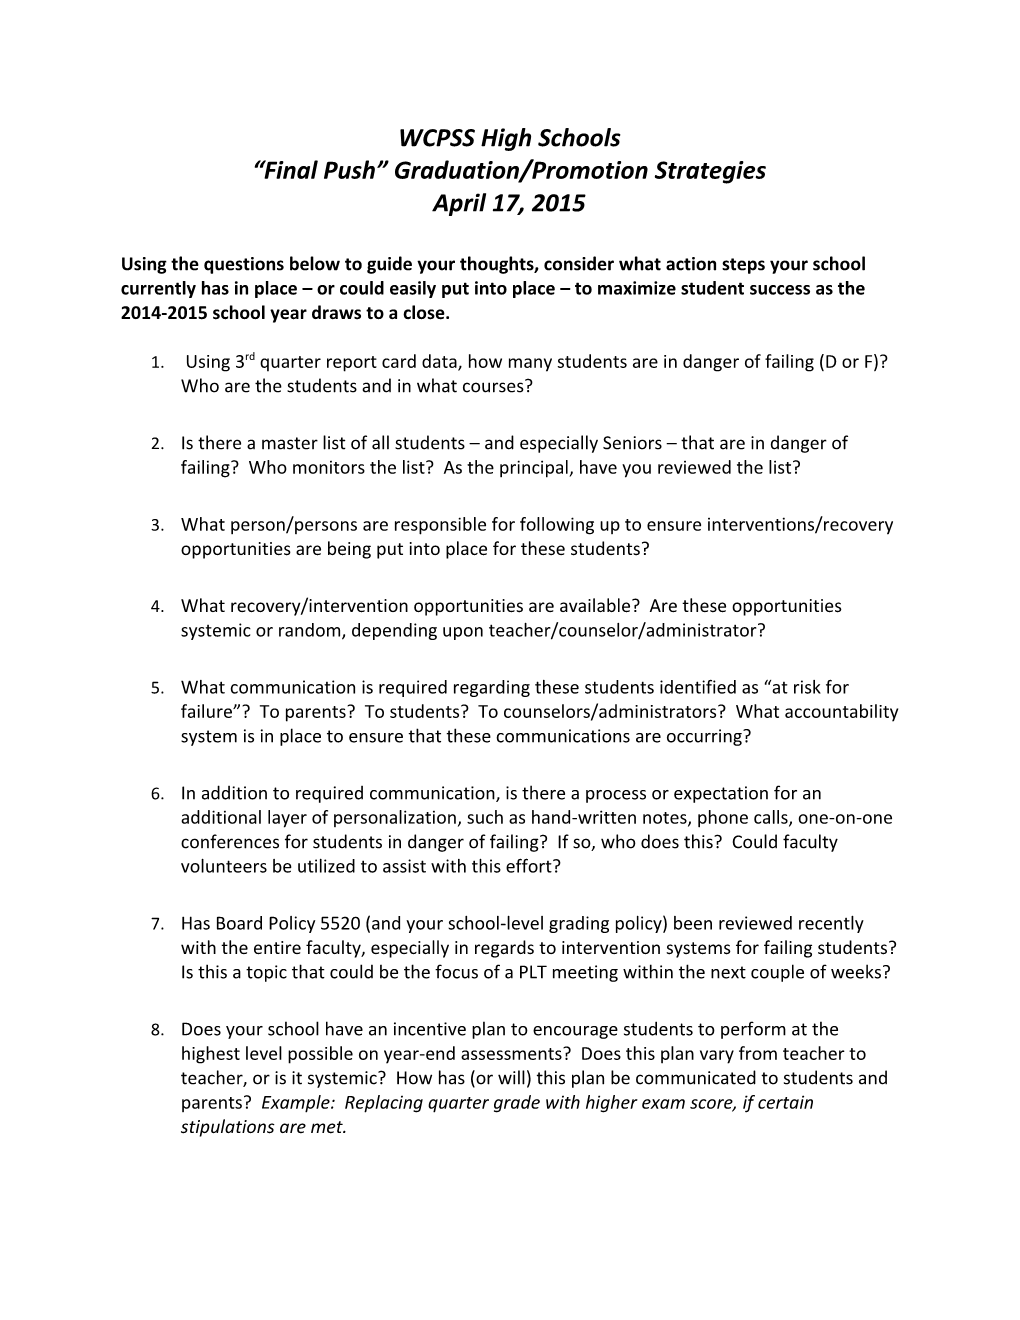 Final Push Graduation/Promotion Strategies